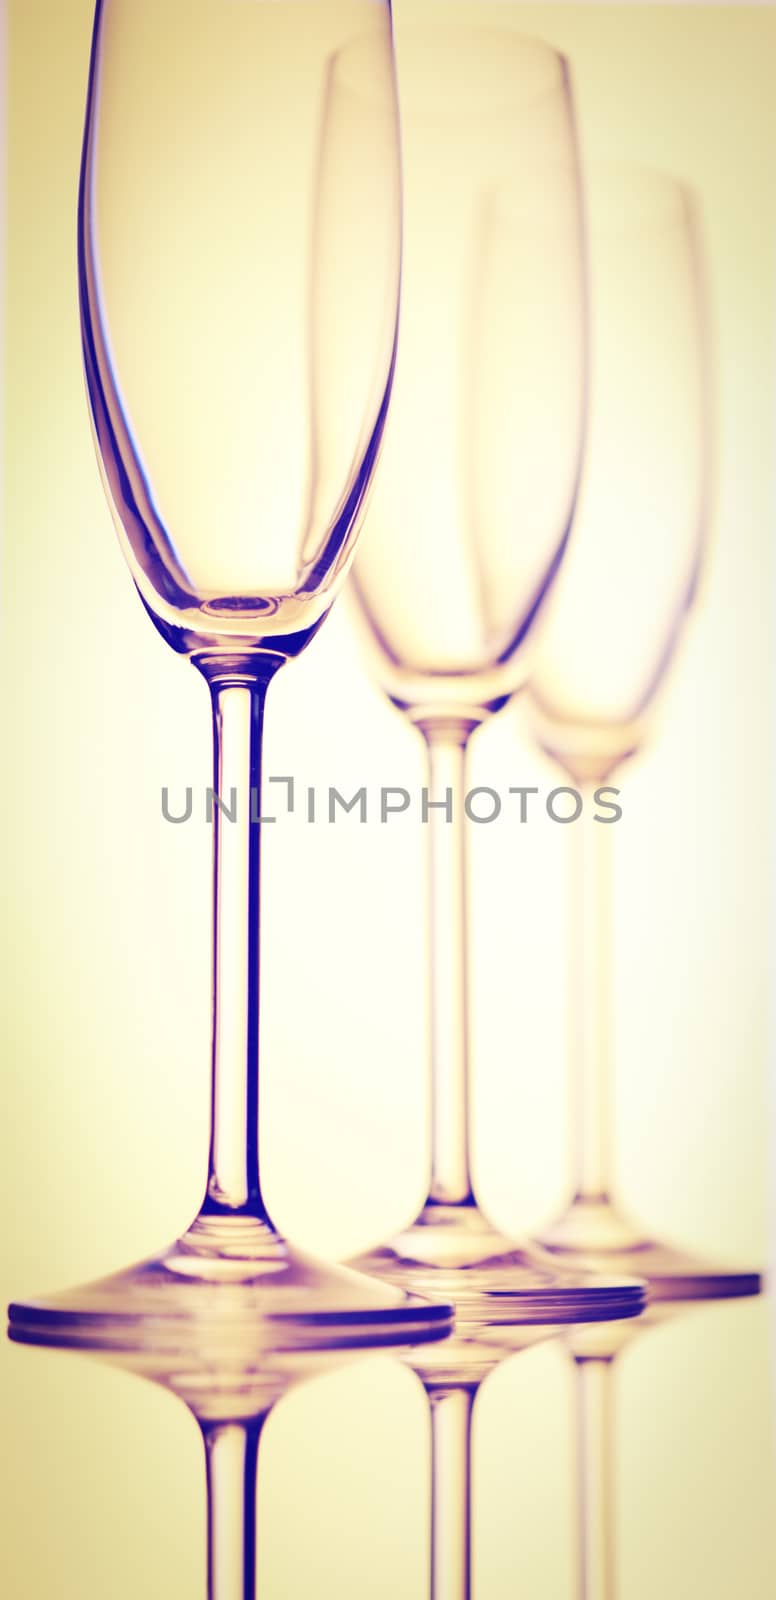 Tree Elegant Tall Wineglass for Champagne, Instagram Effect